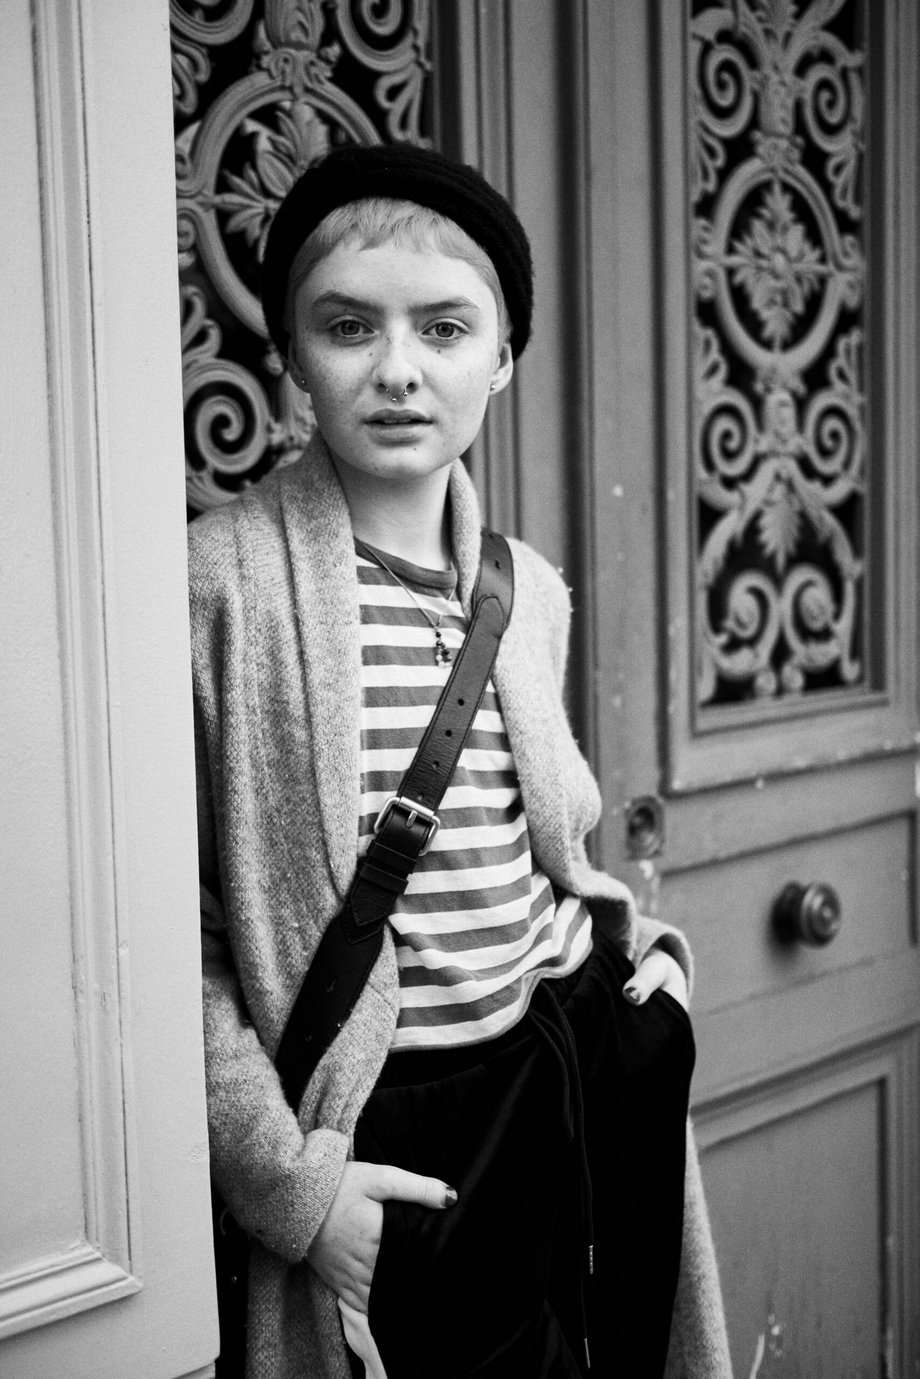 Jillian Clark's portrait of Lachlan Watson in a Parisian doorway wearing a striped shirt and beret